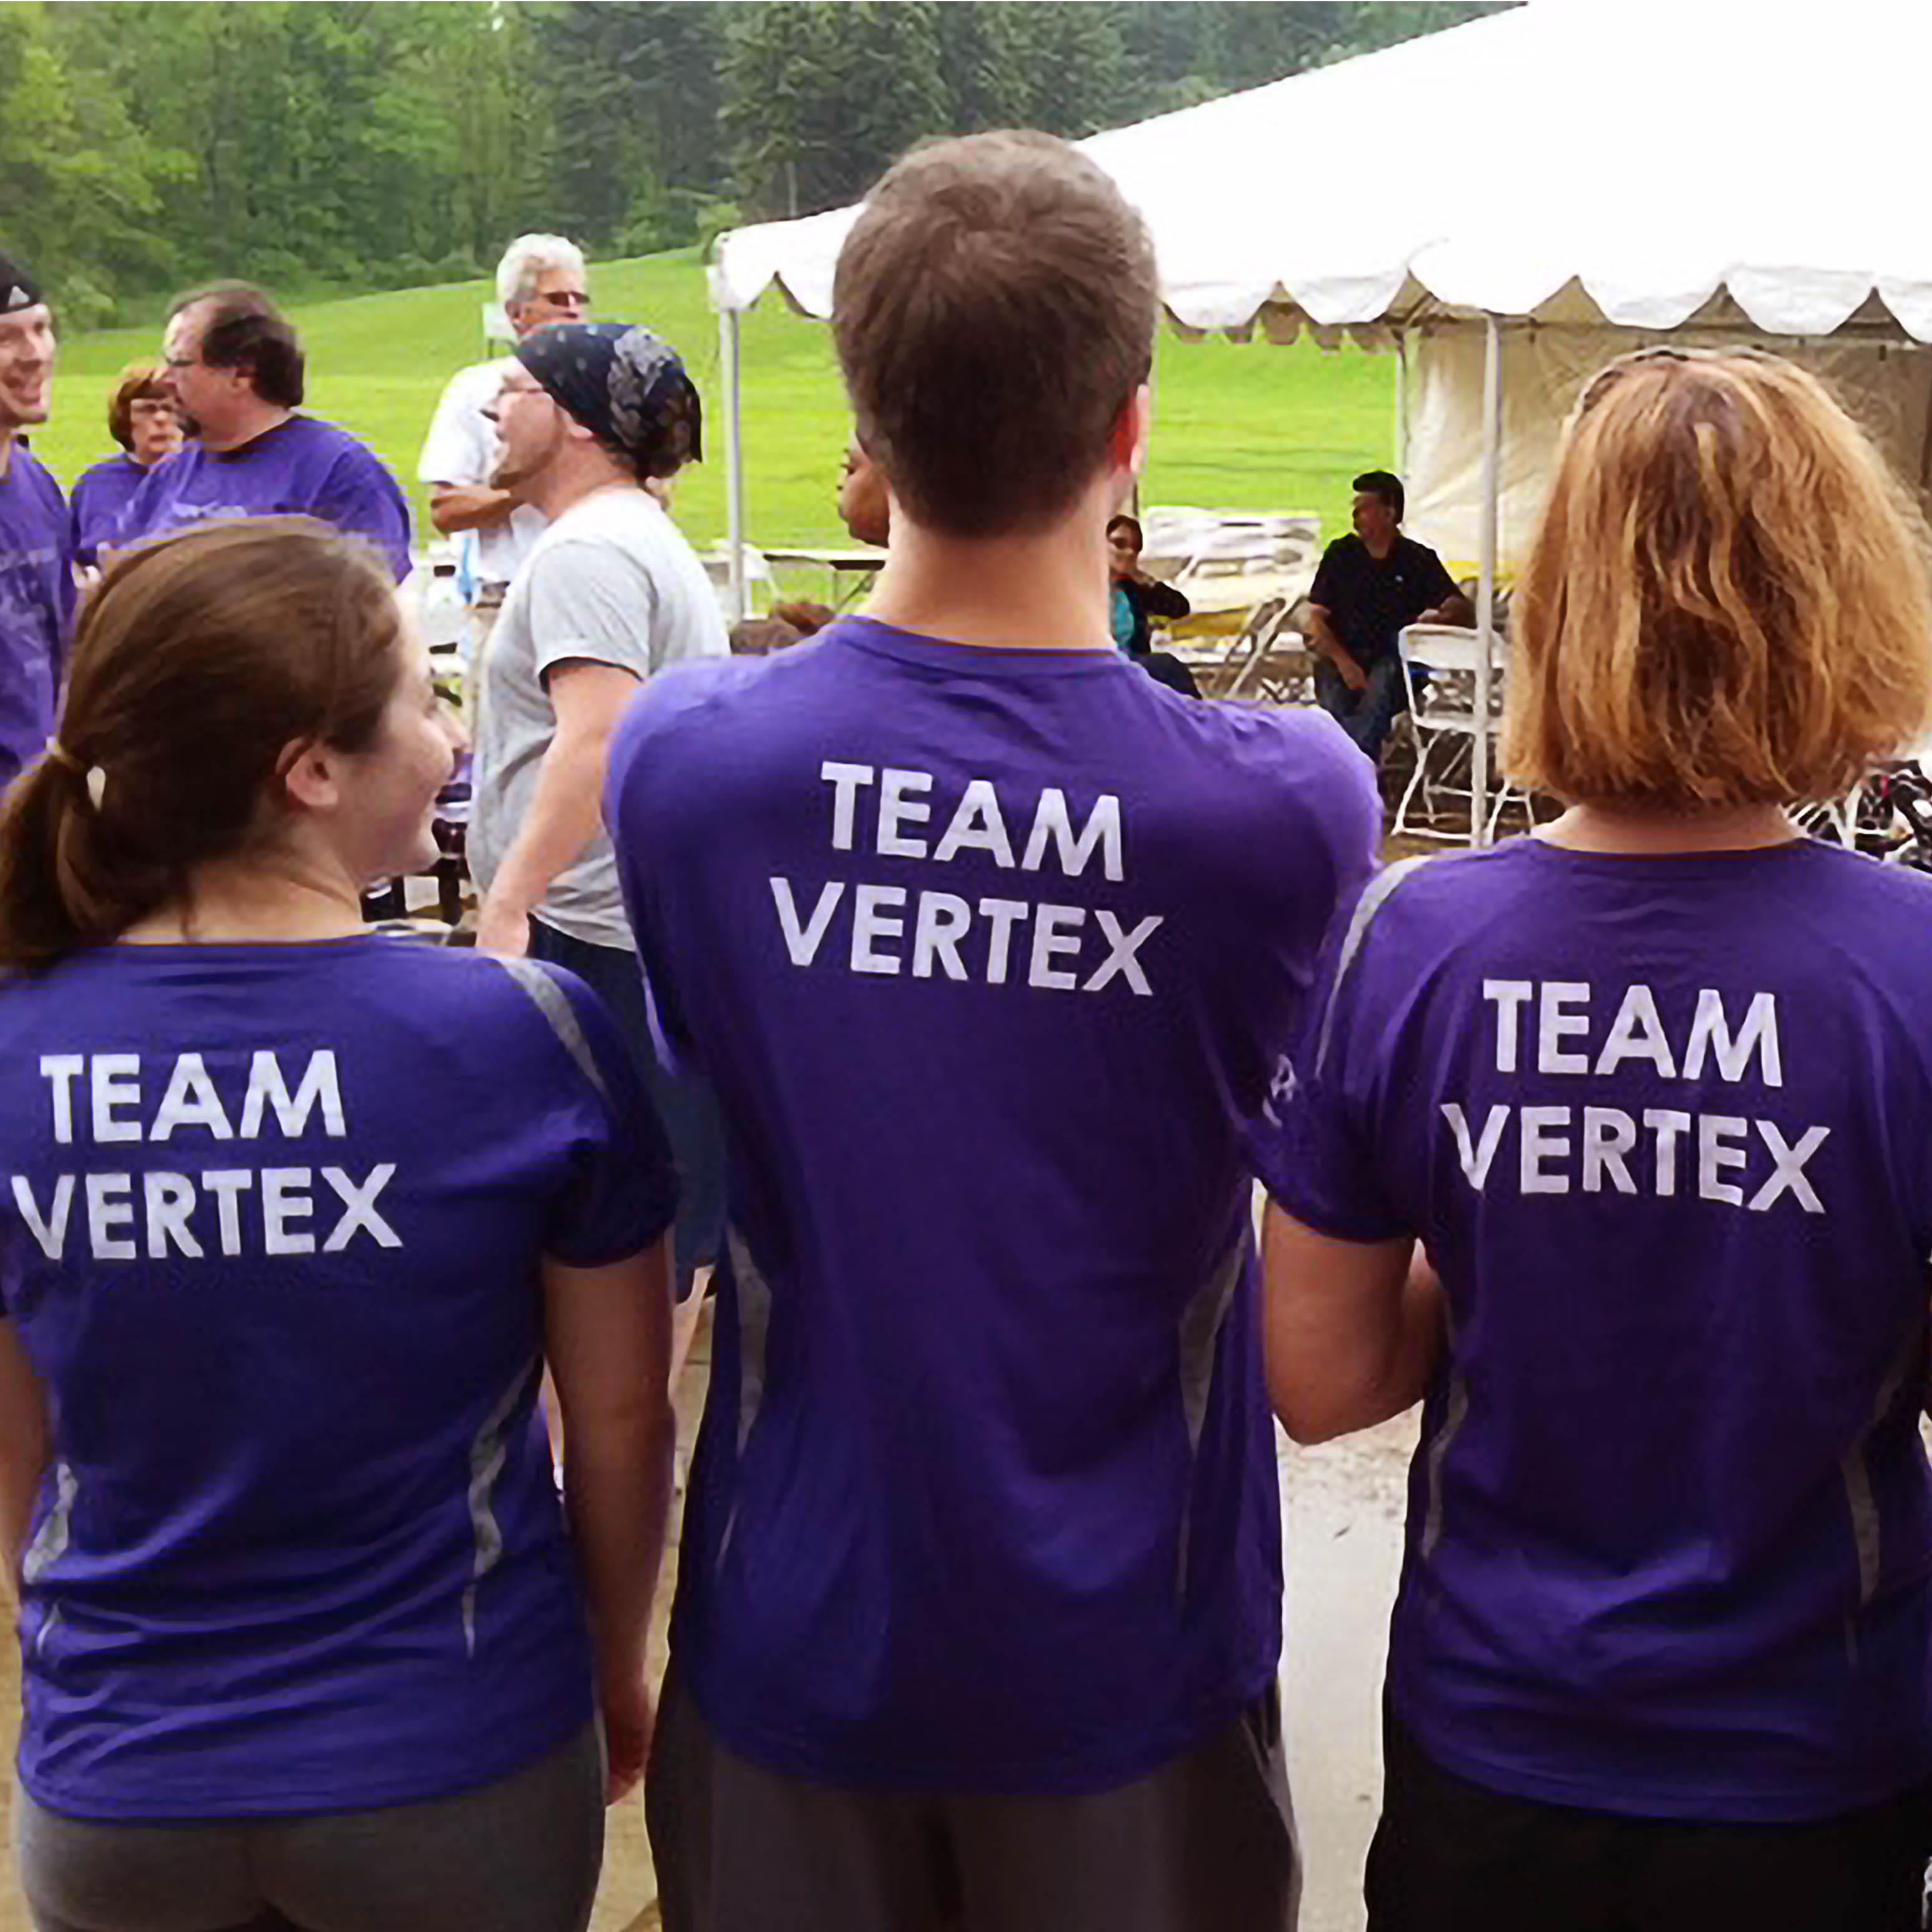 Team Vertex members at a CF event wearing purple shirts